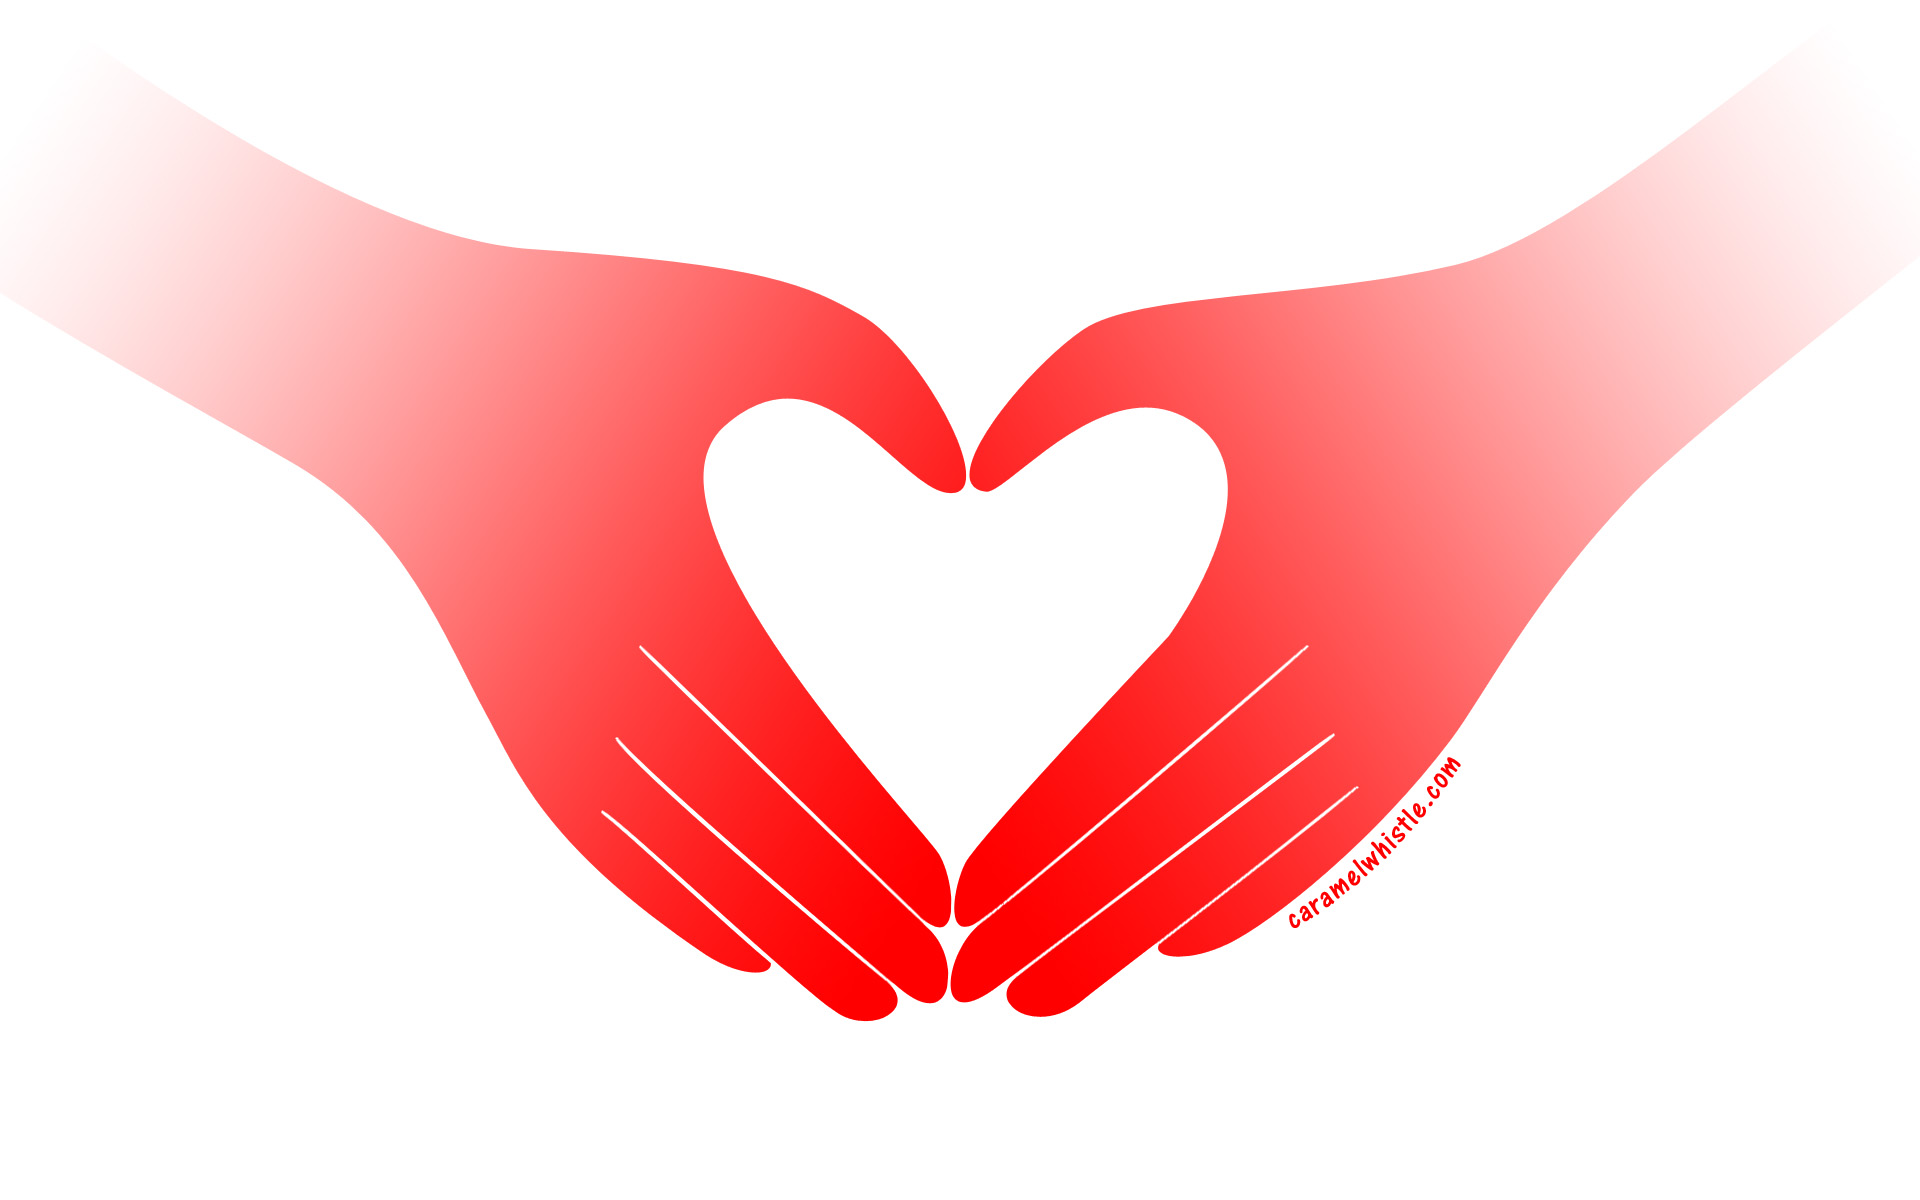  Art with heart logo 